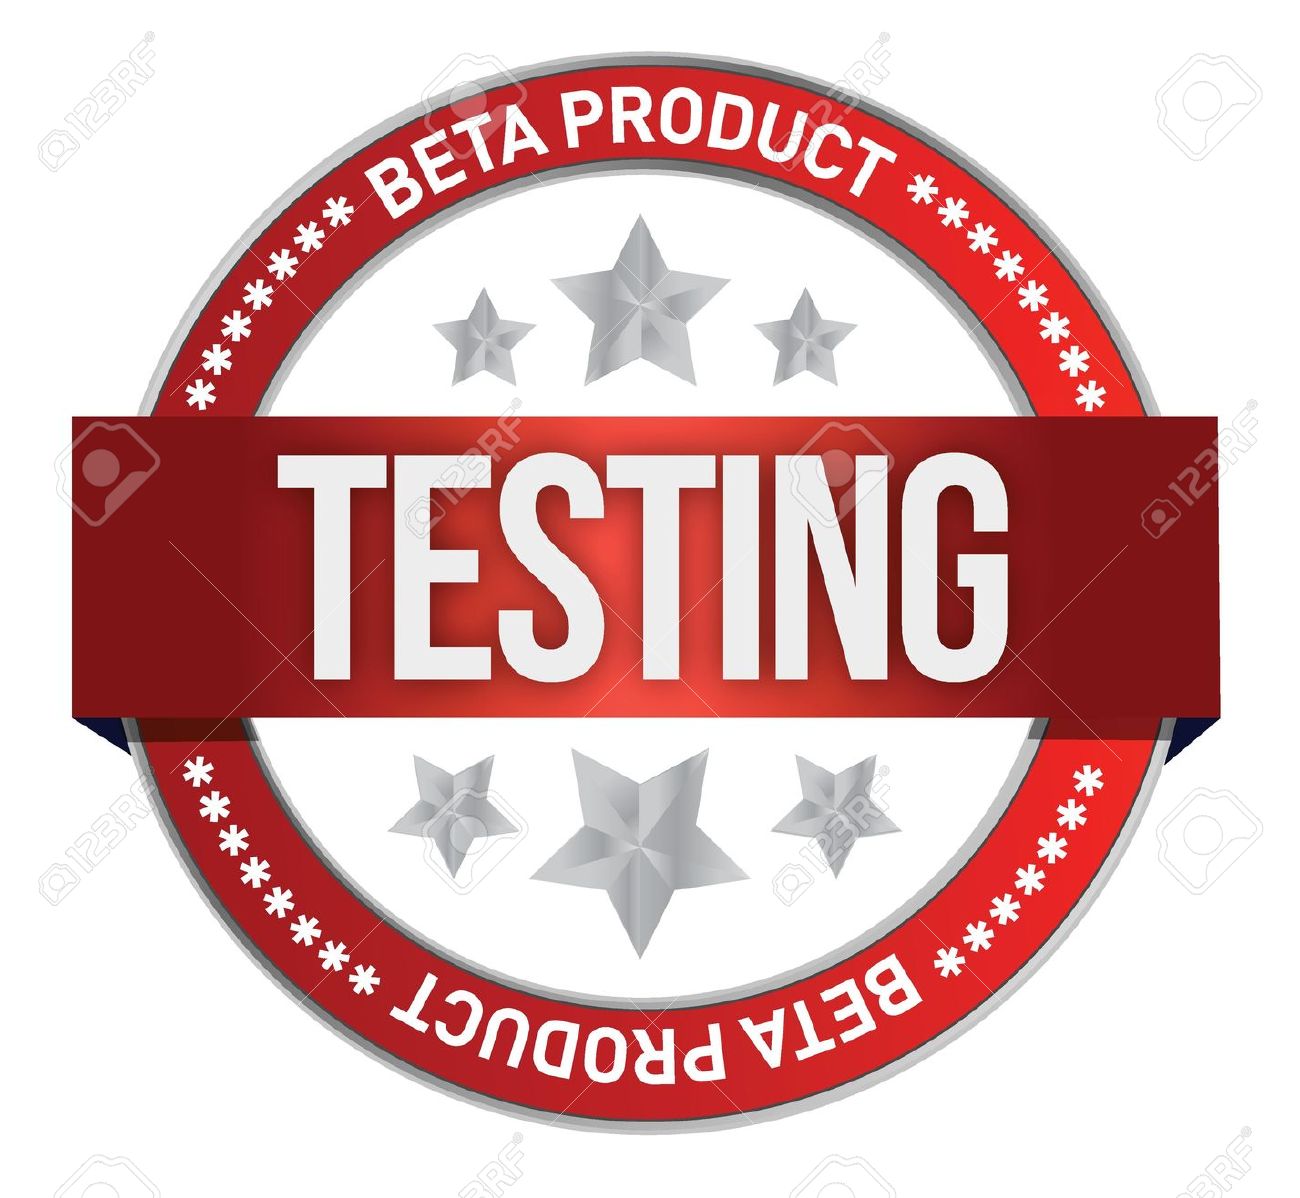 Beta Test #6